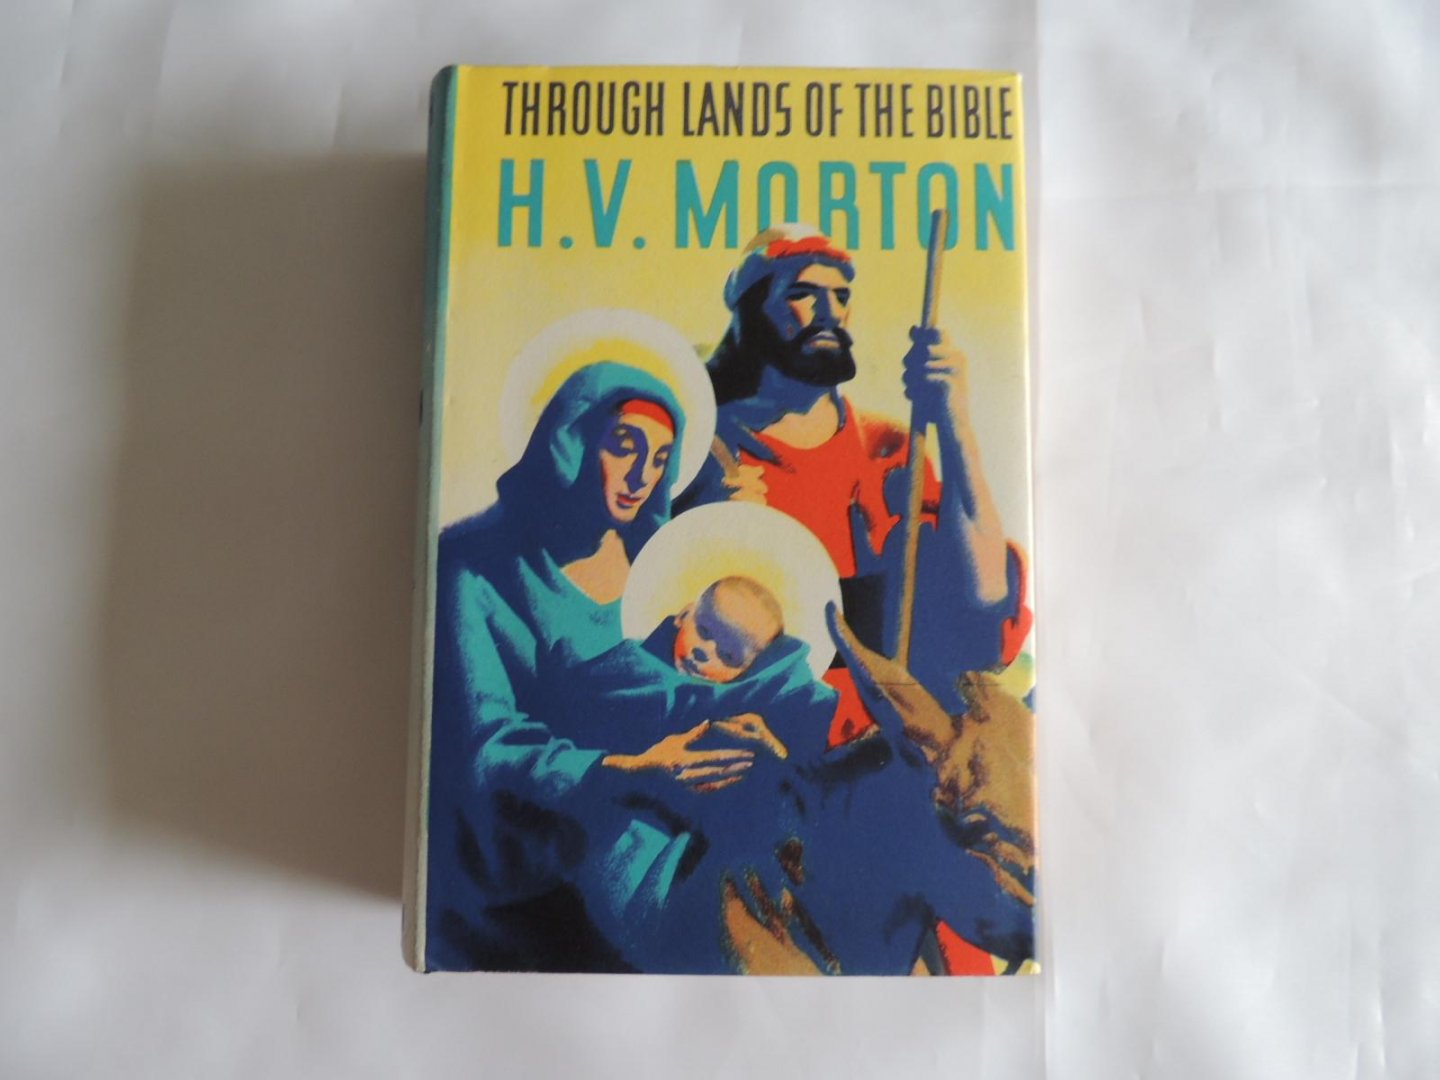 Morton - Through lands of the Bible